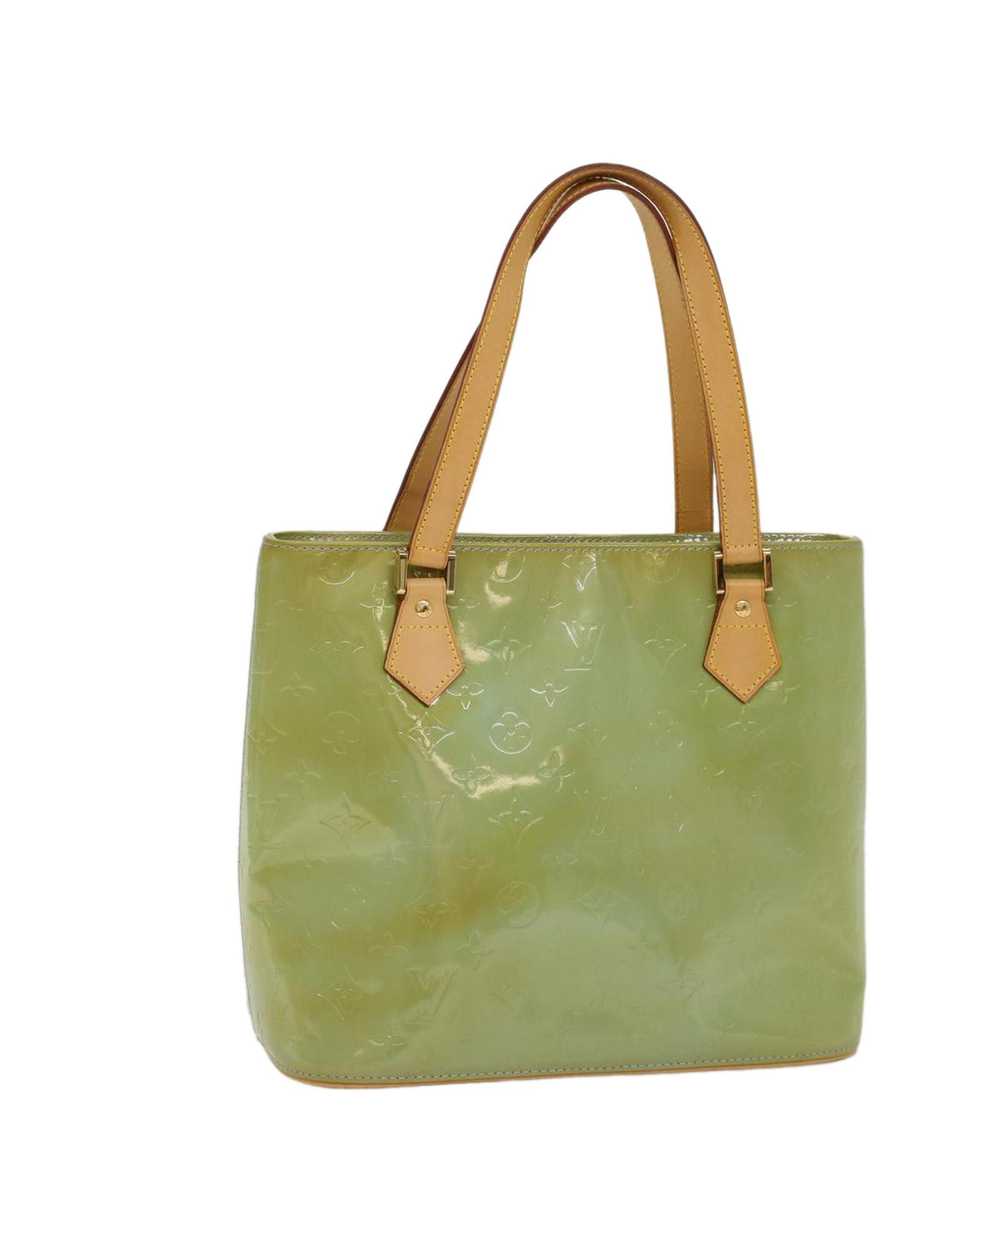 Louis Vuitton Green Patent Leather Handbag - image 1